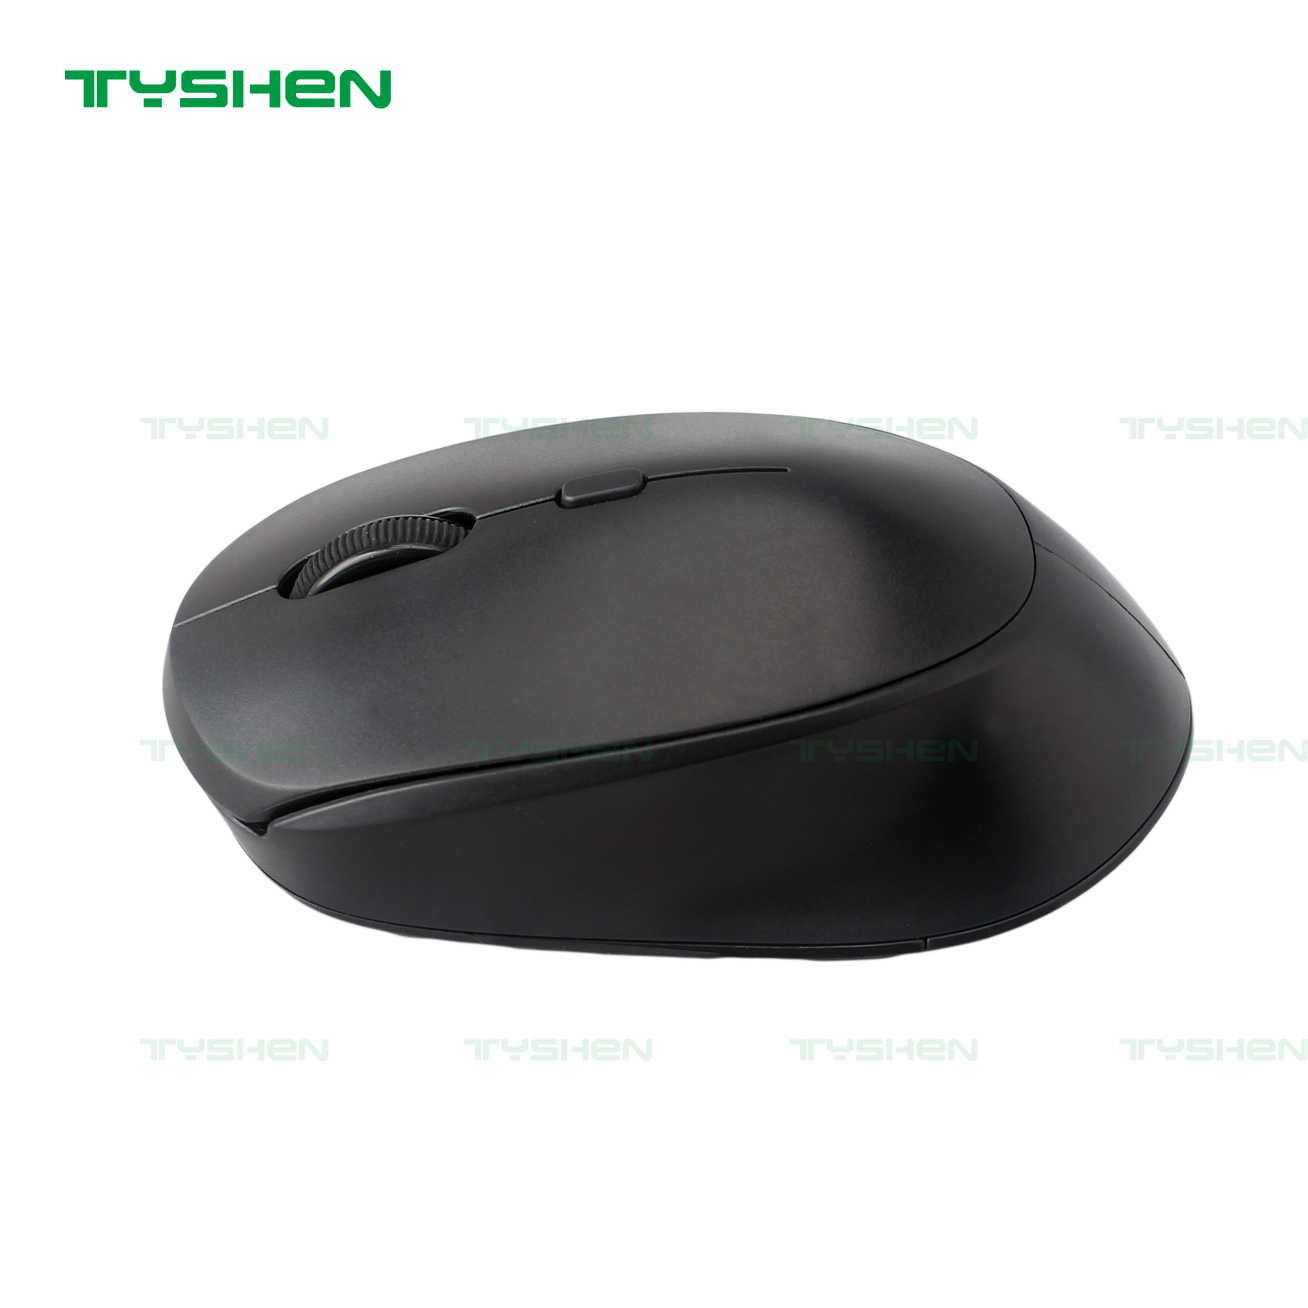 Silent Wireless Mouse,Simple&Classic Design,PixArt Sensor 3065,Reliable Performance